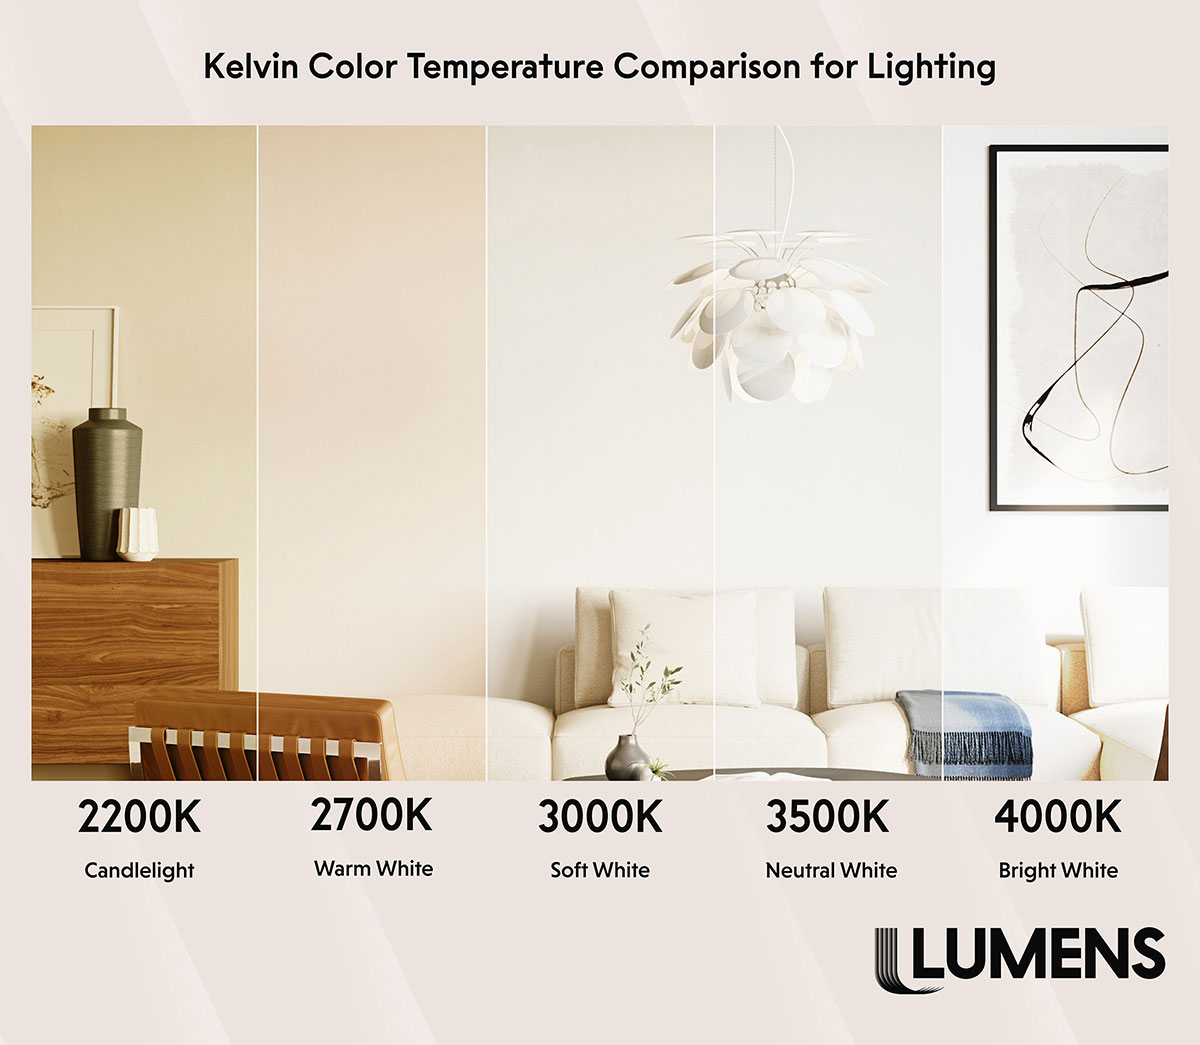 Kelvin Color Temperature Scale Chart.